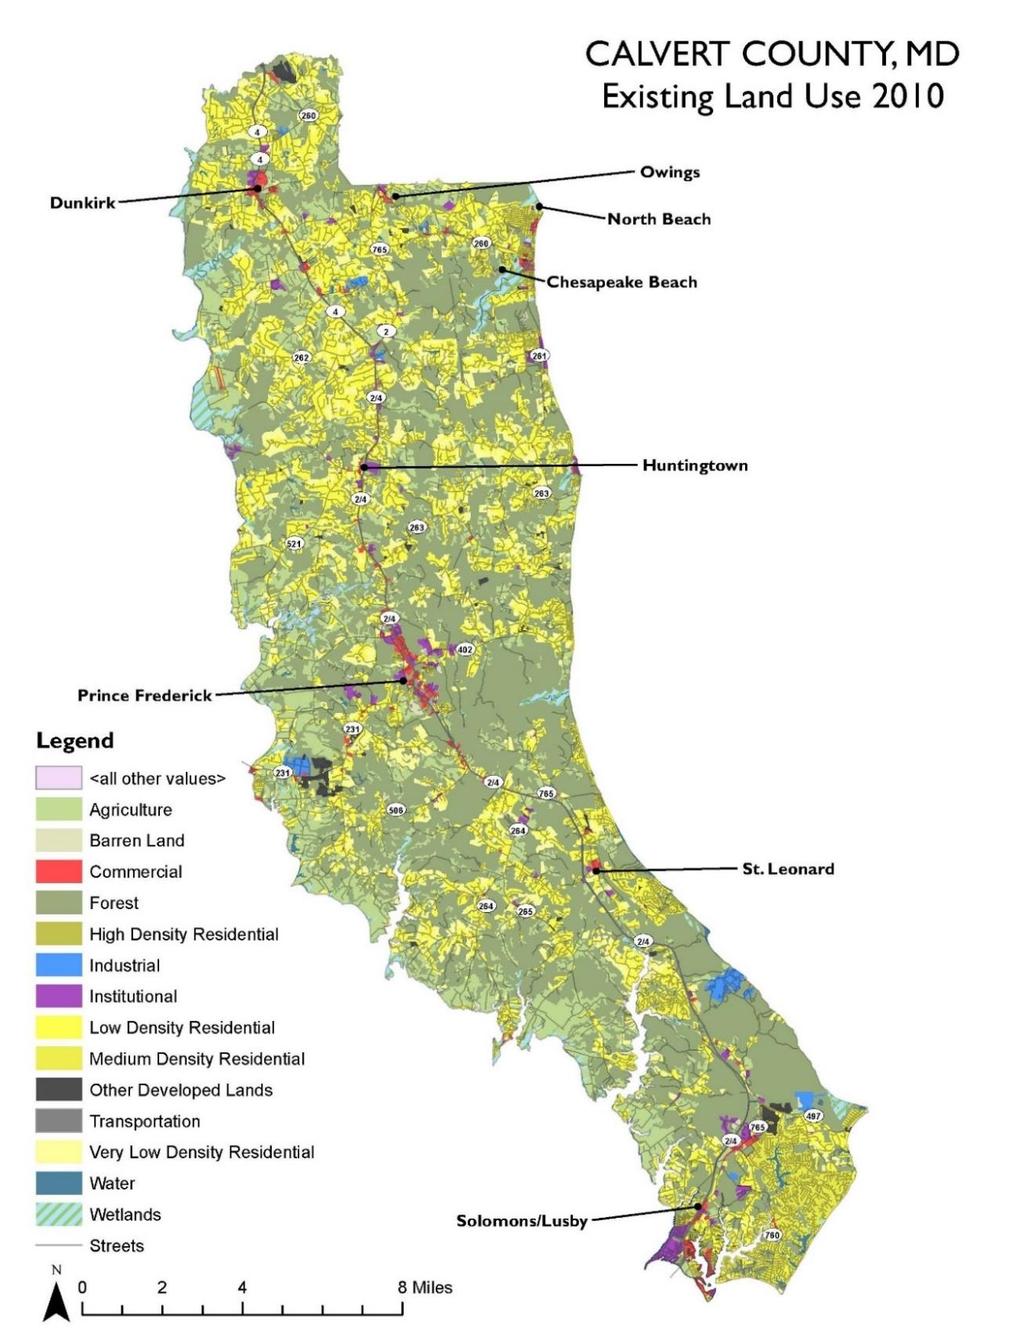 DRAFT Figure 4-3: Existing Land Use Map